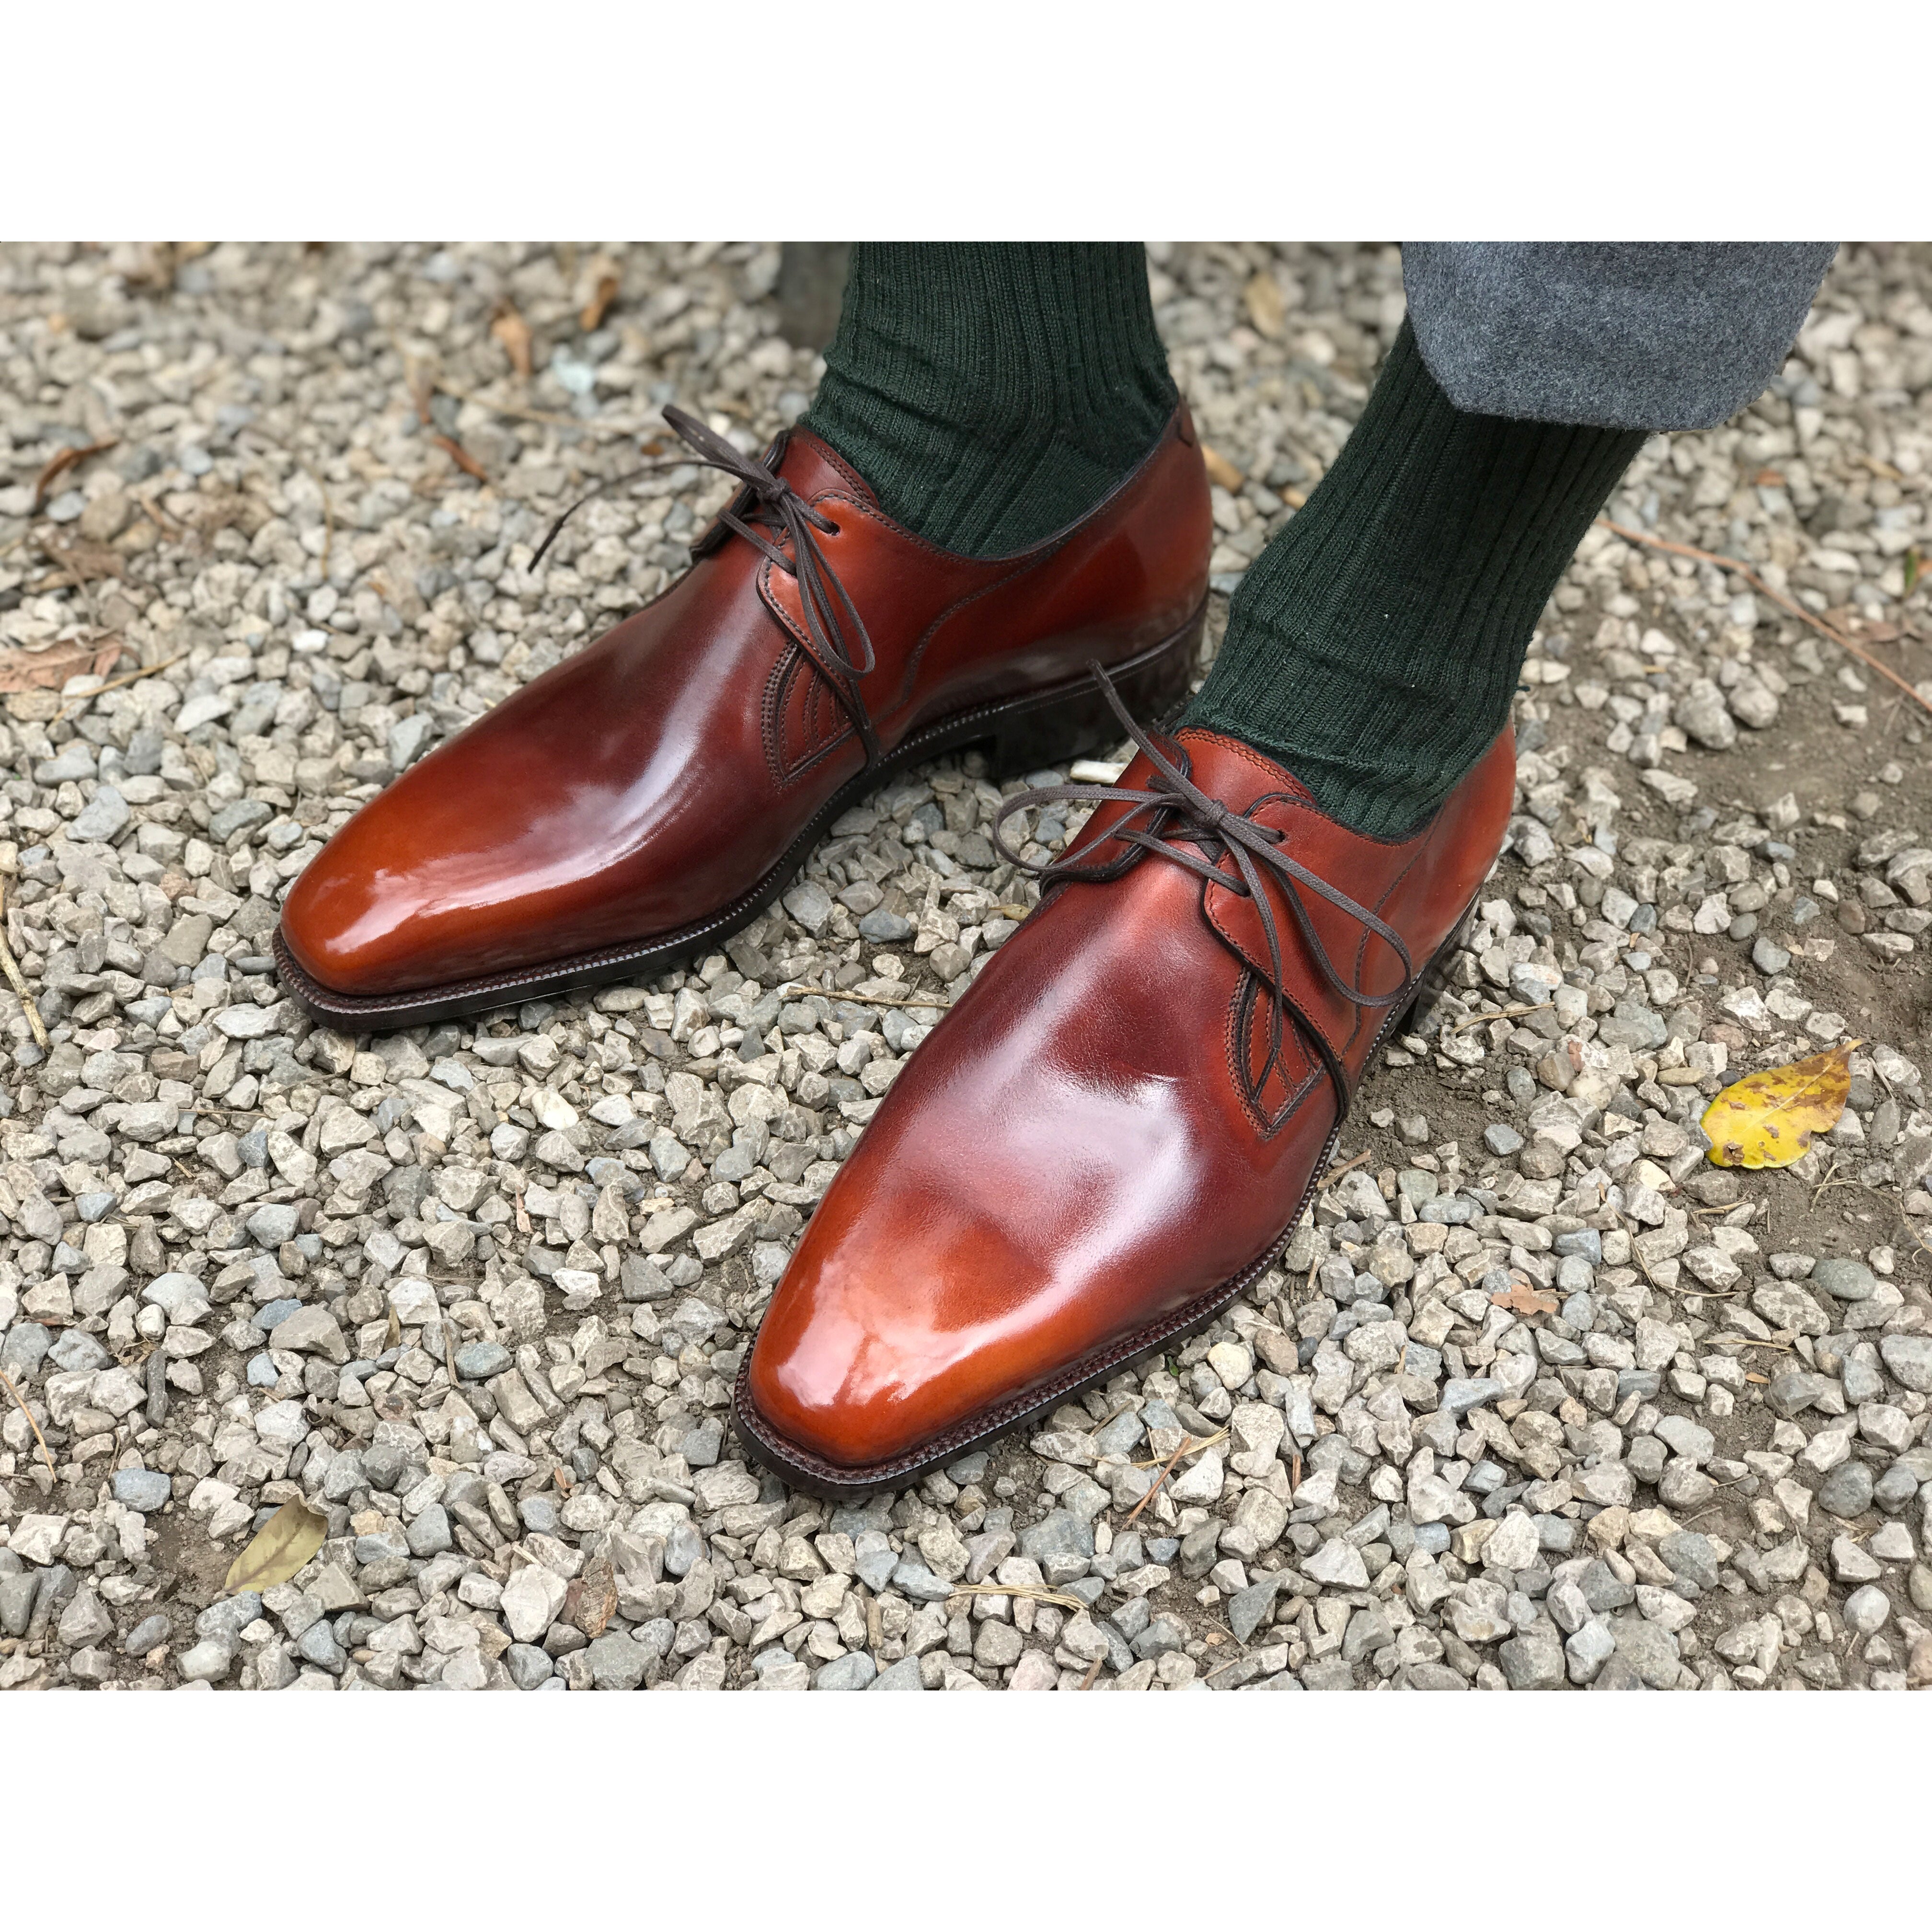 Norman Vilalta Decon Chelsea shoe on feet